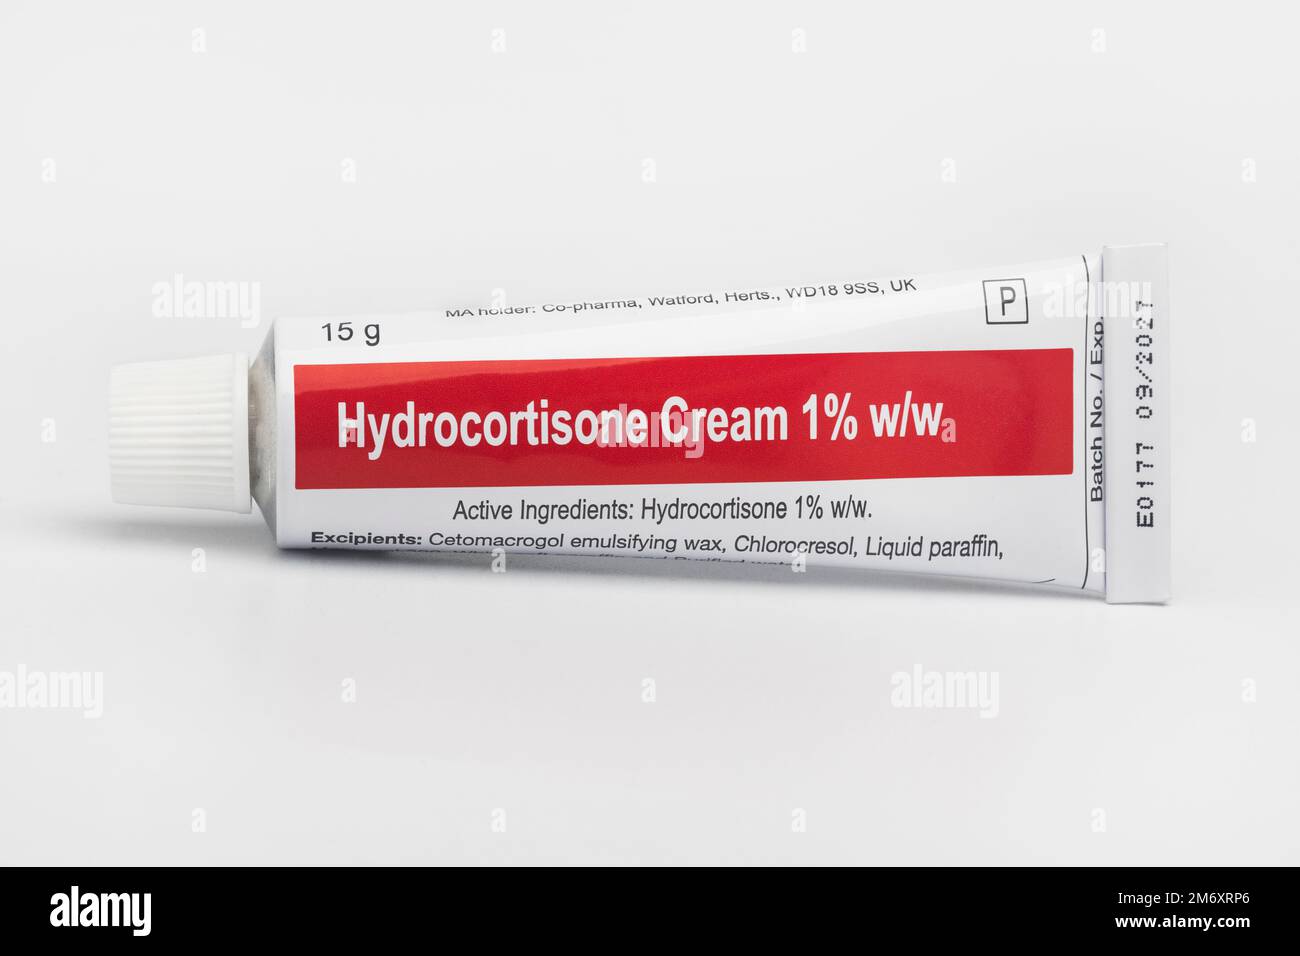 A tube of Co-pharma 1% Hydrocortisone cream Stock Photo